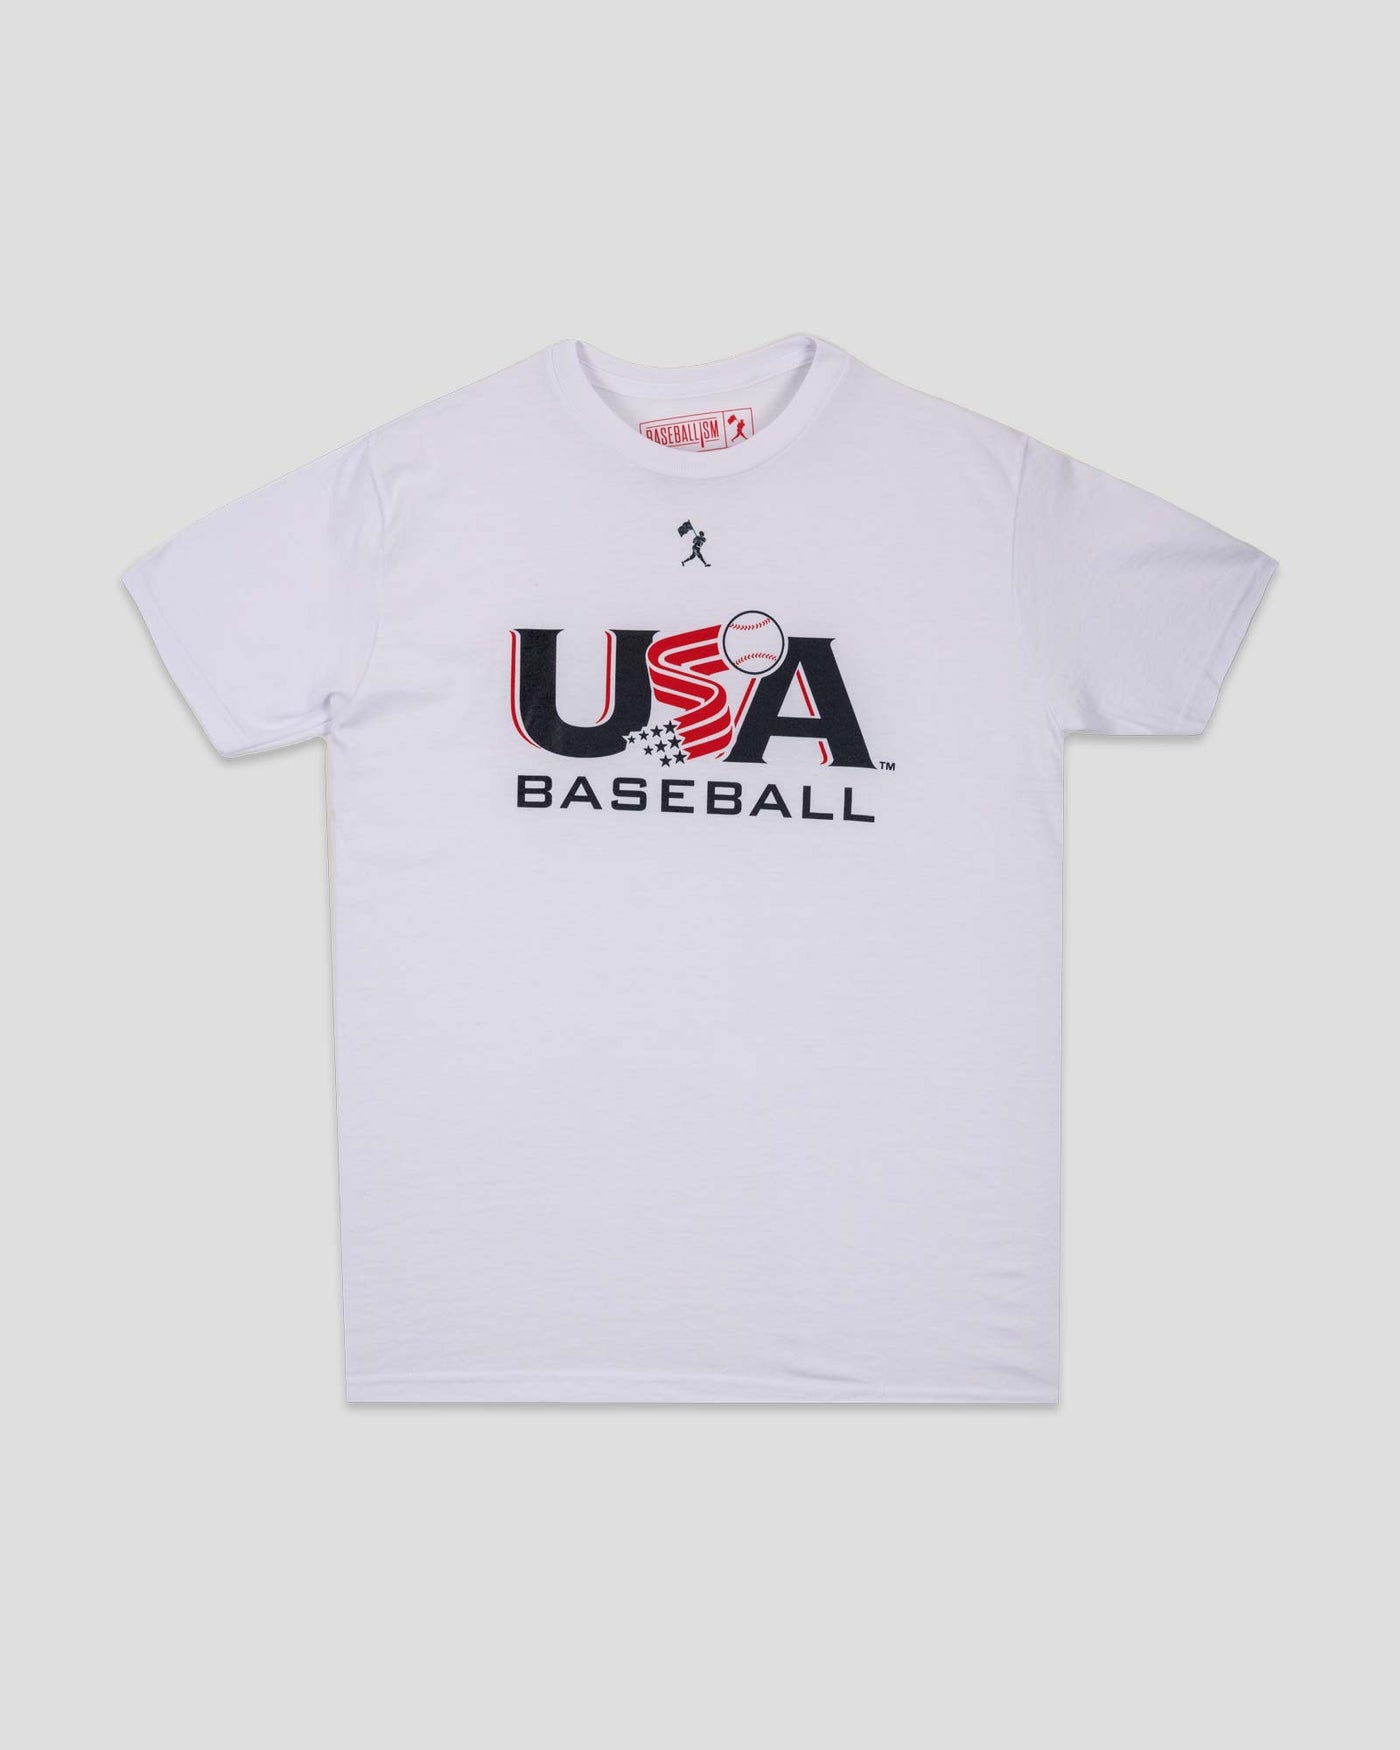 Baseballism x USA Baseball - White